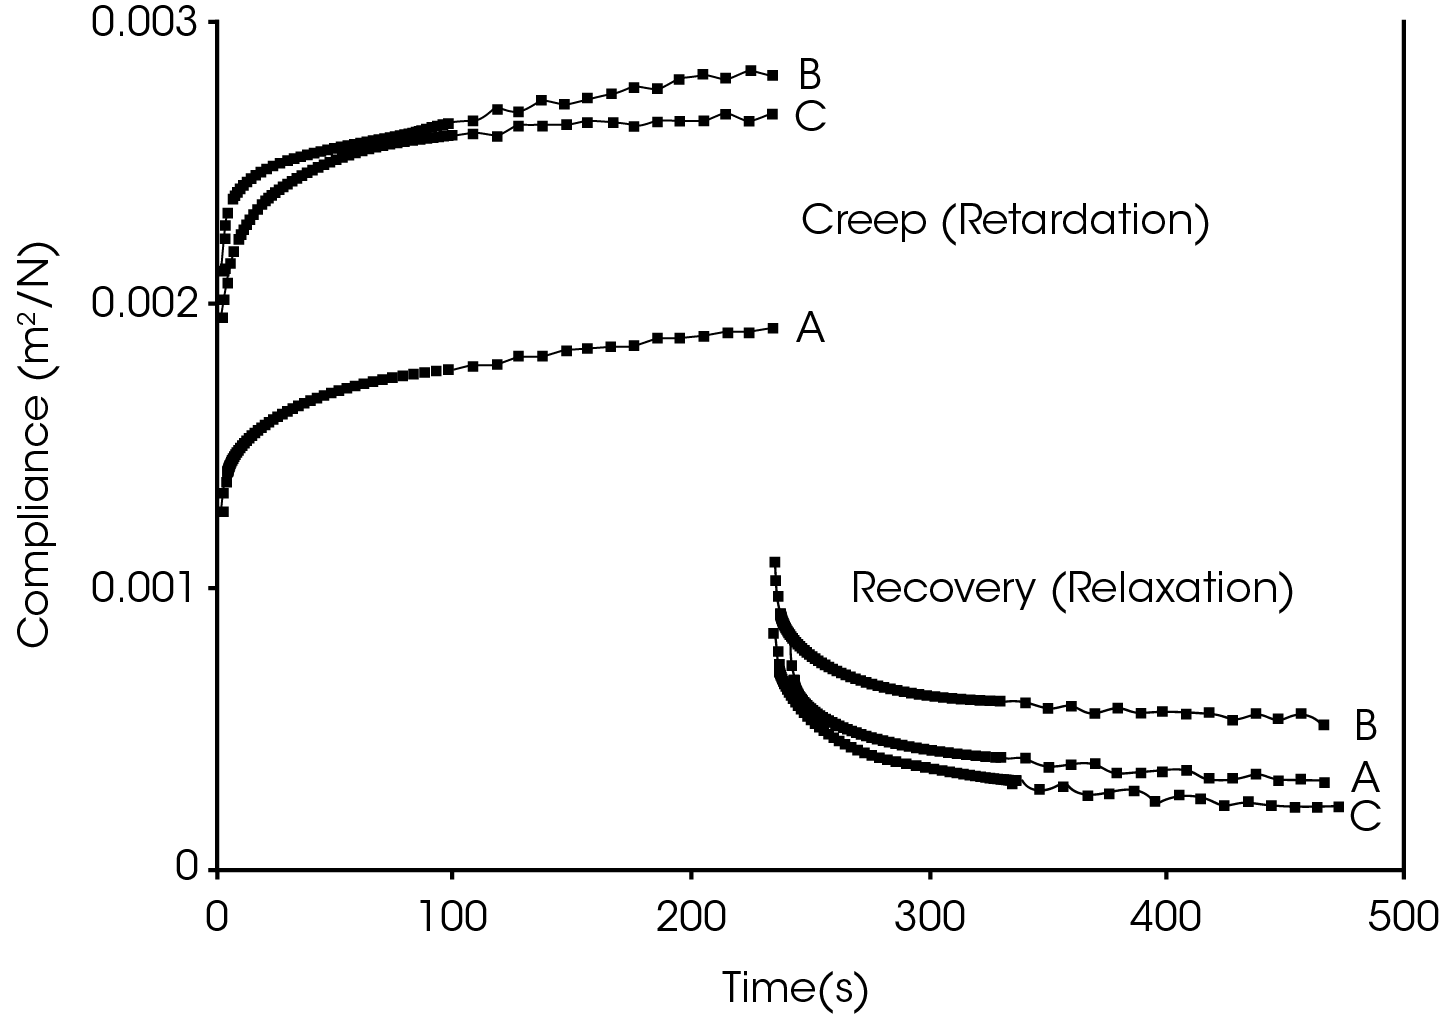 Figure 2. Mayonnaise – Creep